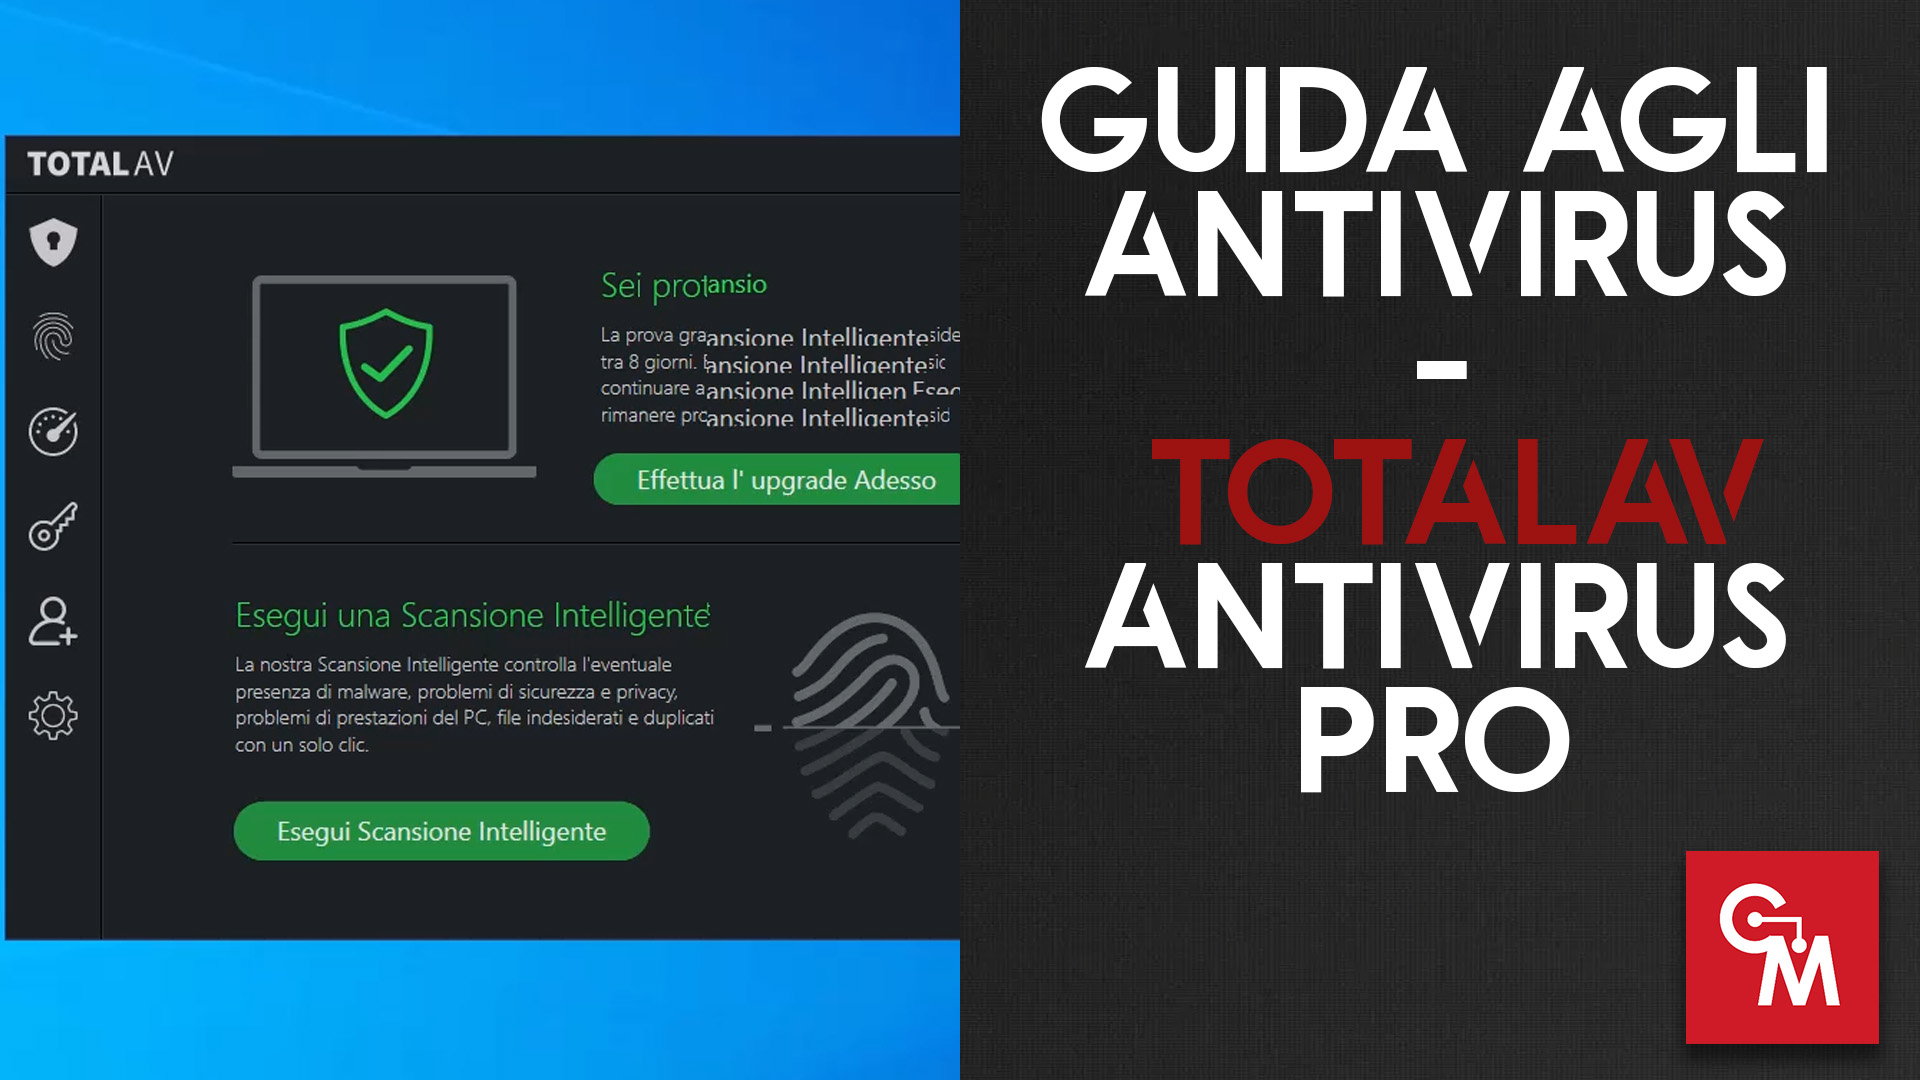 Guida agli Antivirus | TotalAV Antivirus Pro